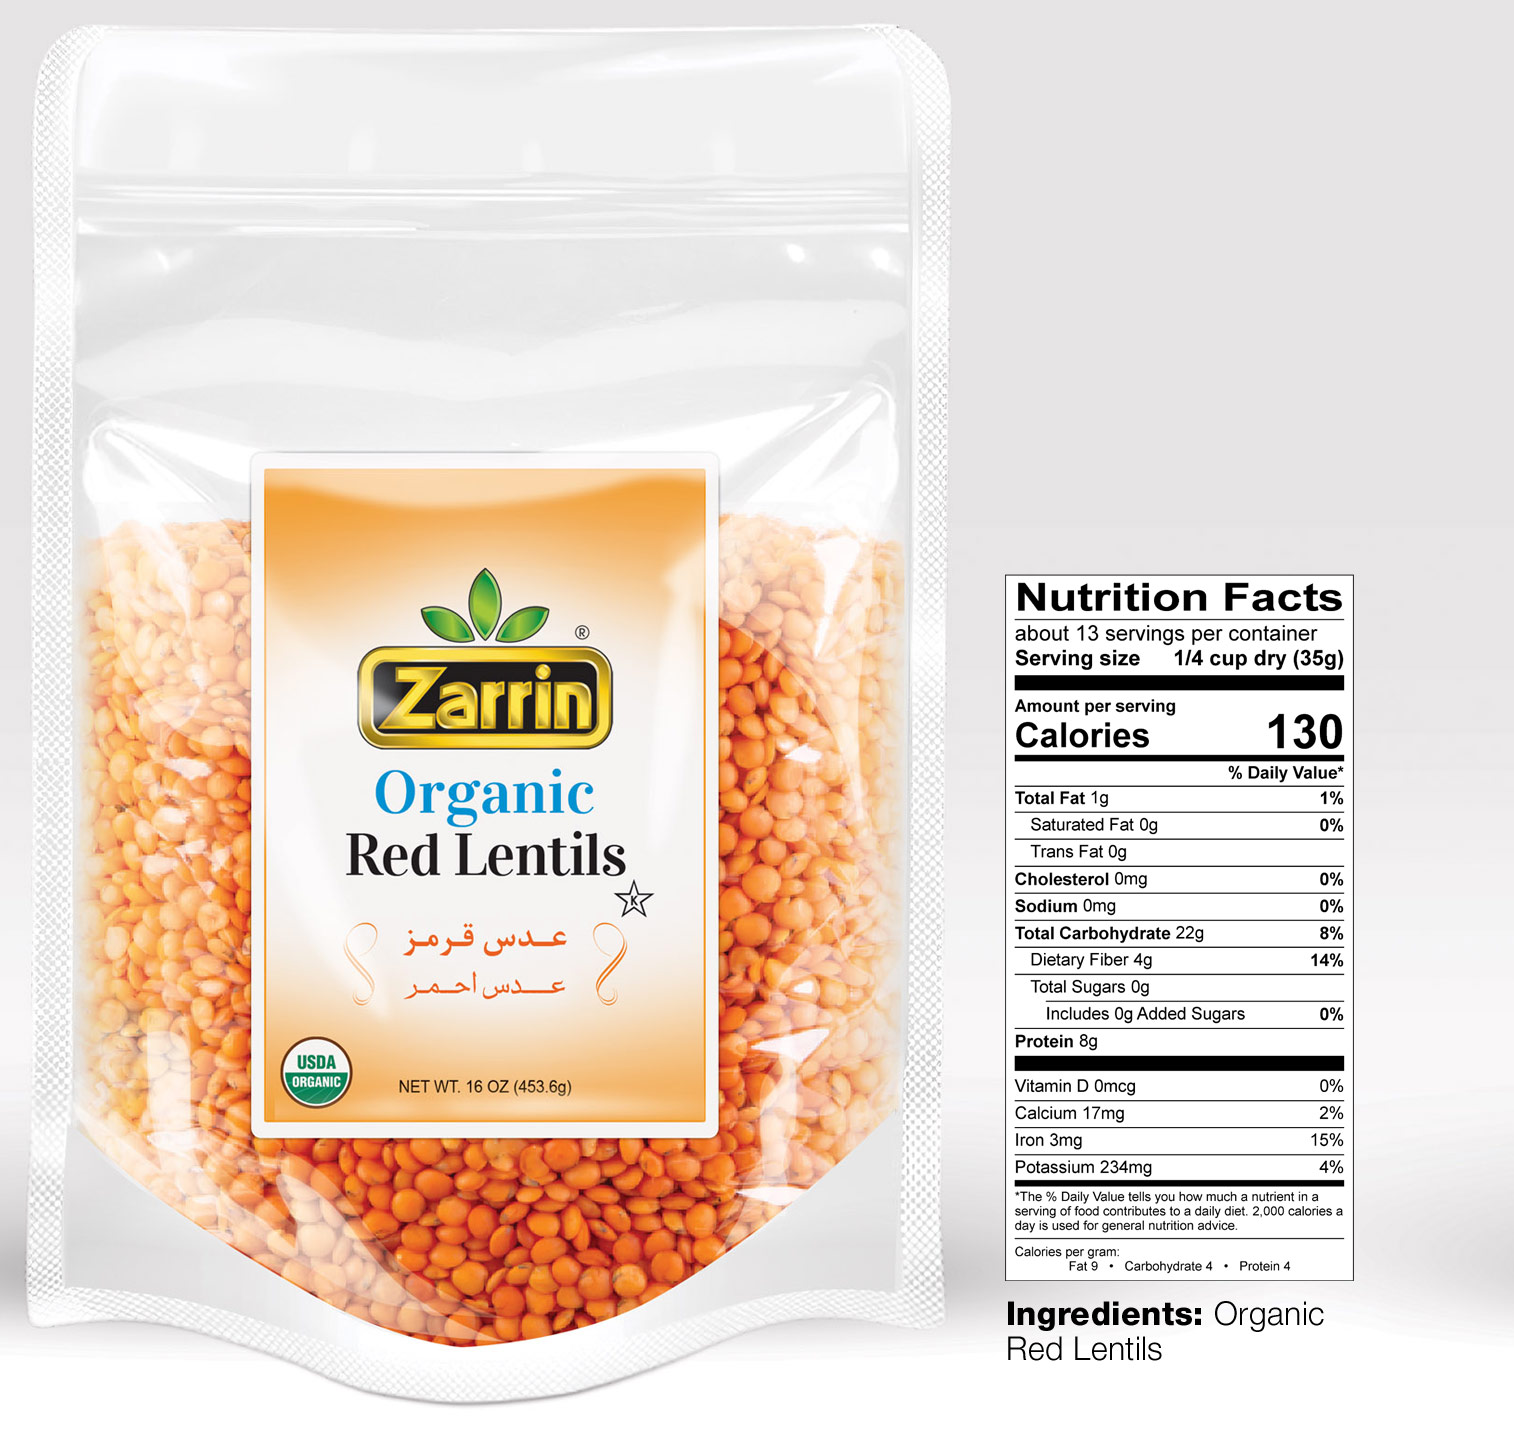 Organic Red Lentils in 16oz by Zarrin.